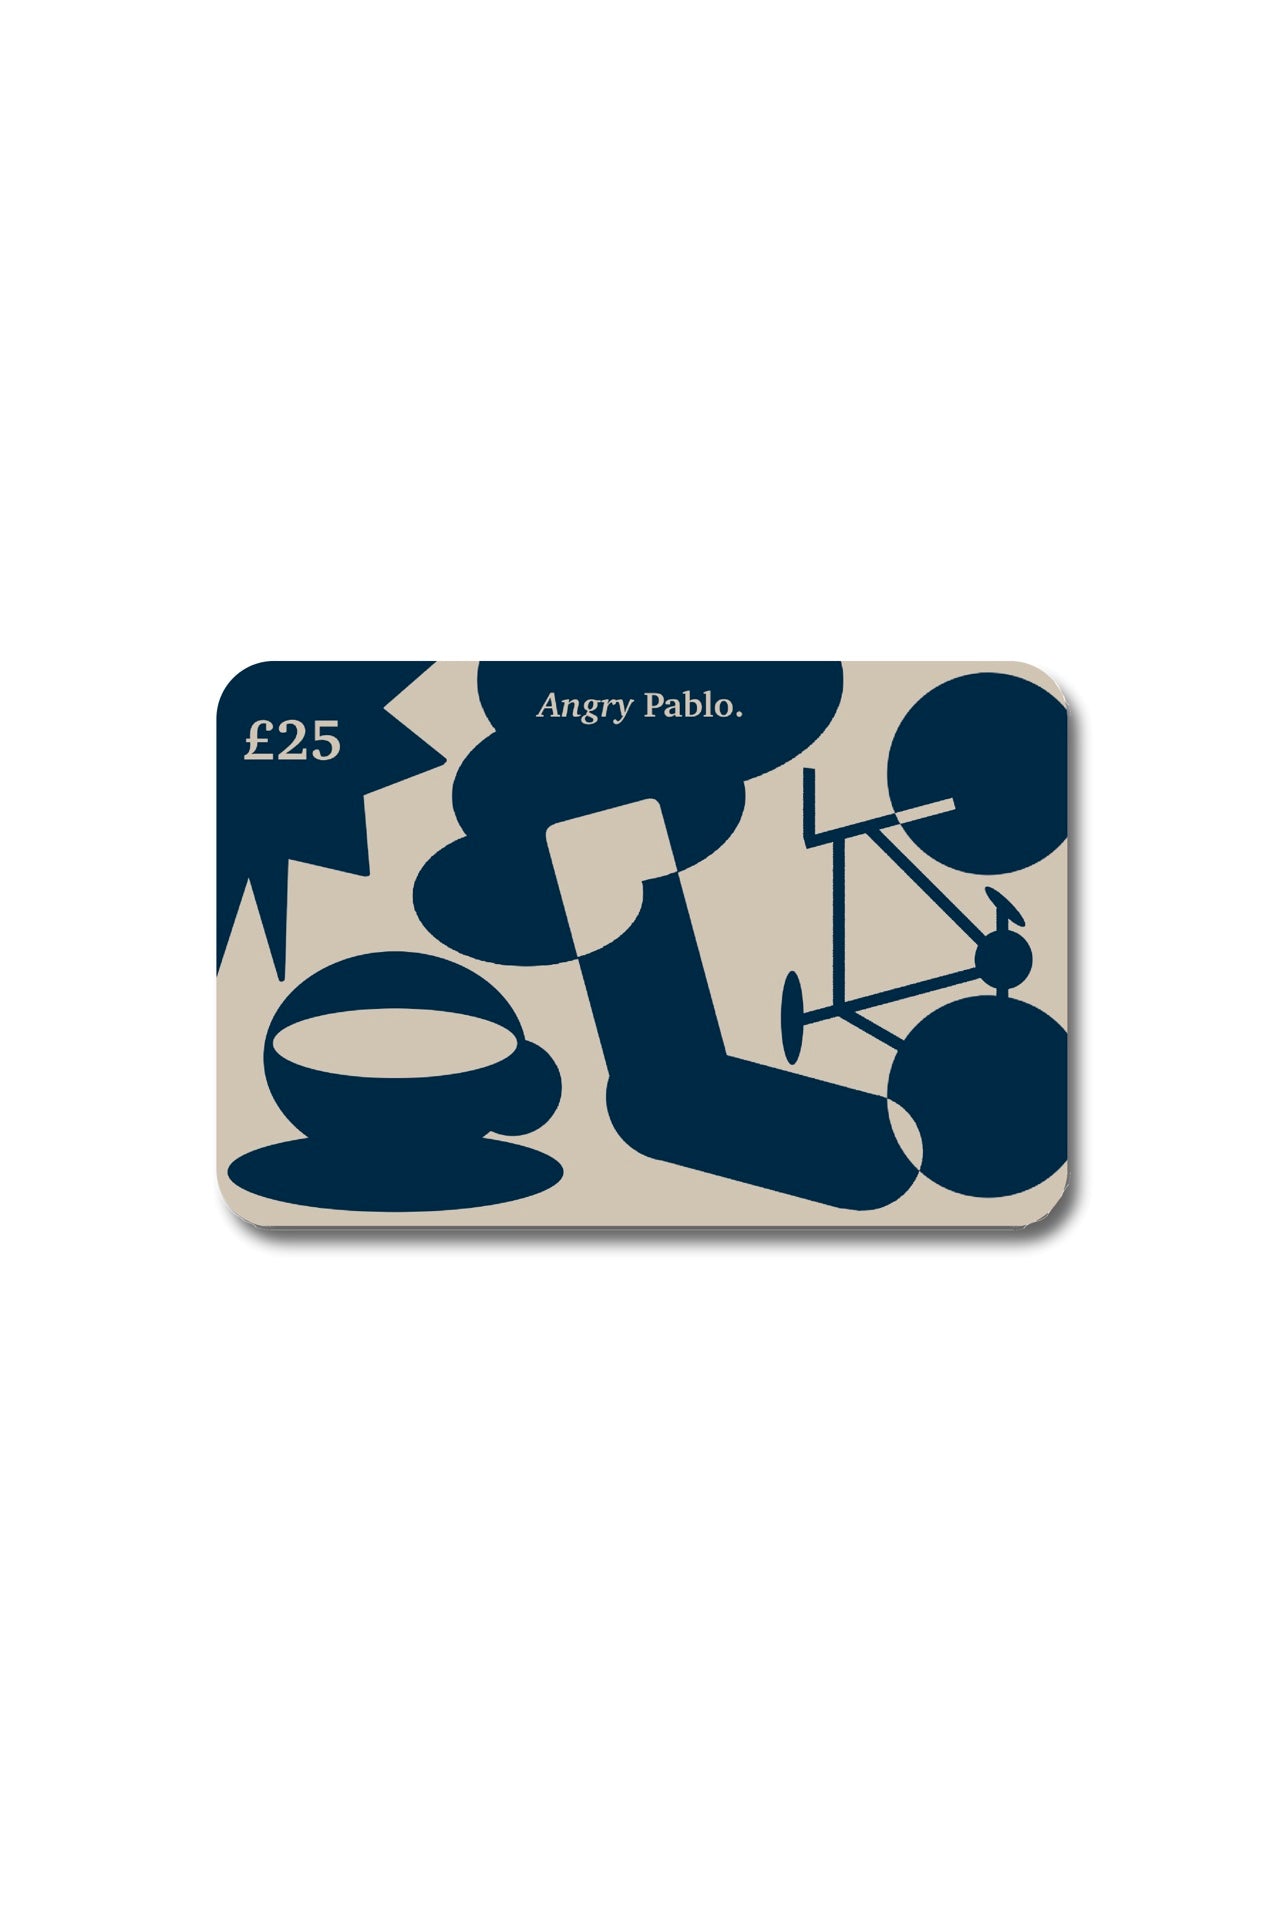 E-Gift Card // £25